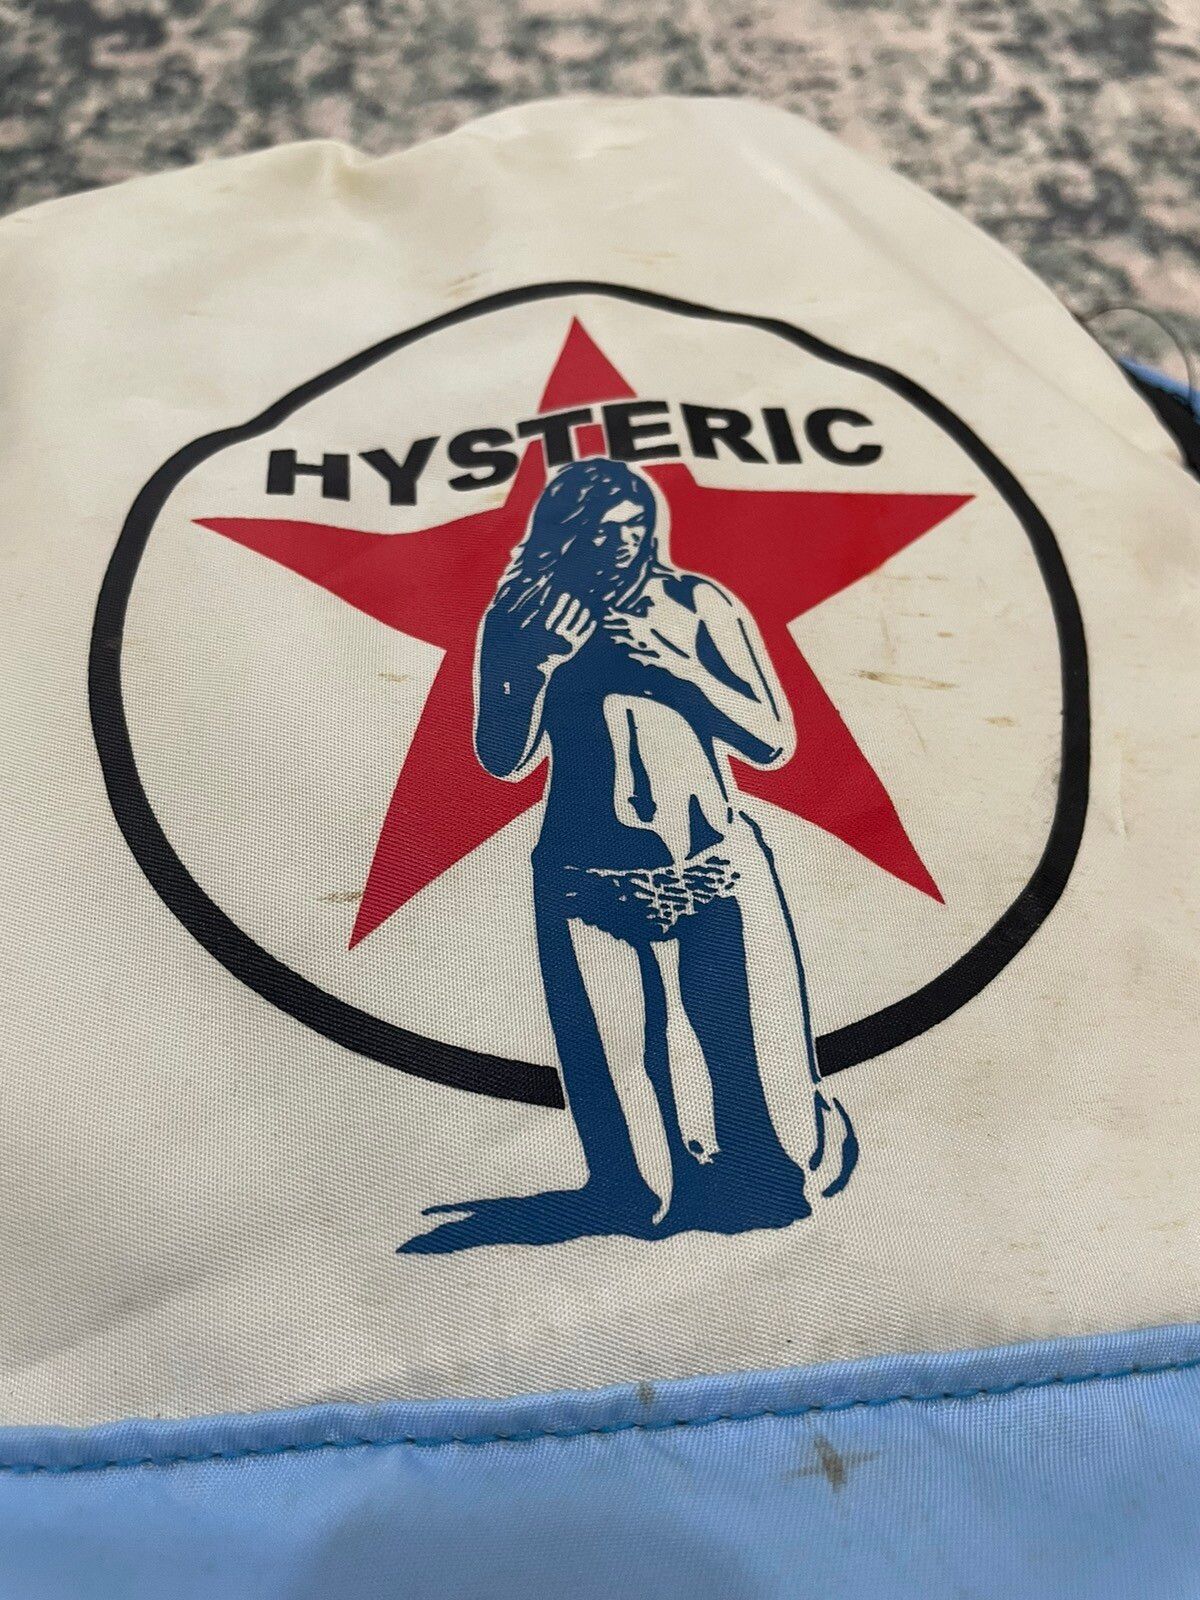 Vintage Hysteric Glamour Names Girl Nylon 2 in 1 Bagpack - 5